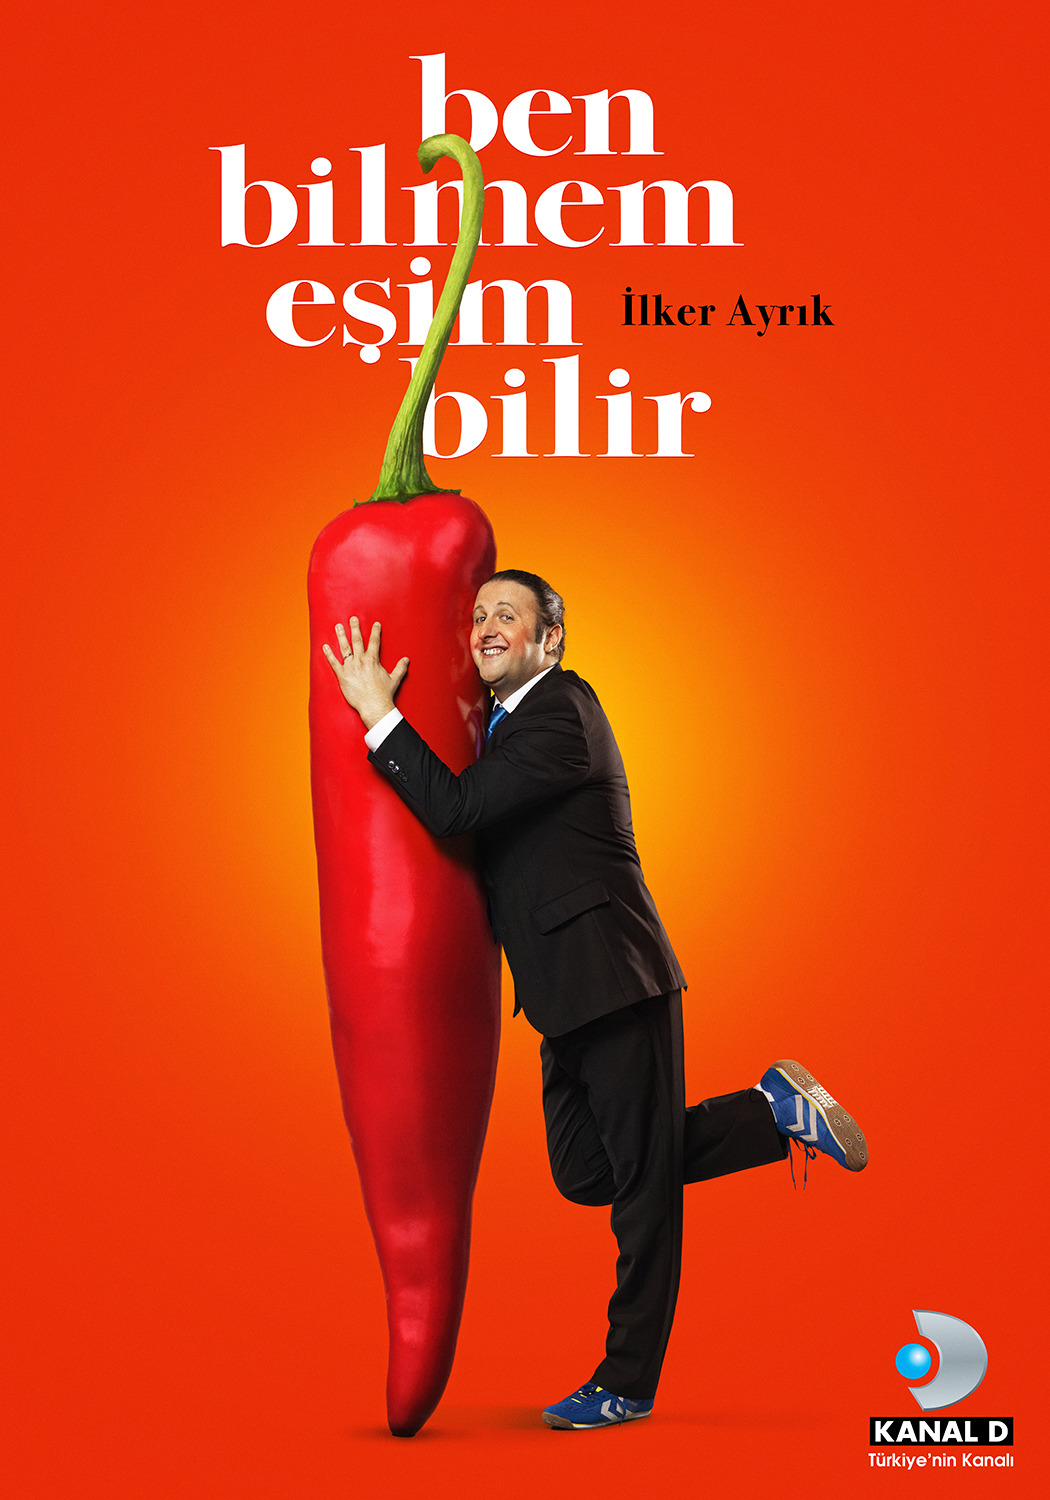 Extra Large TV Poster Image for Ben bilmem esim bilir (#1 of 4)